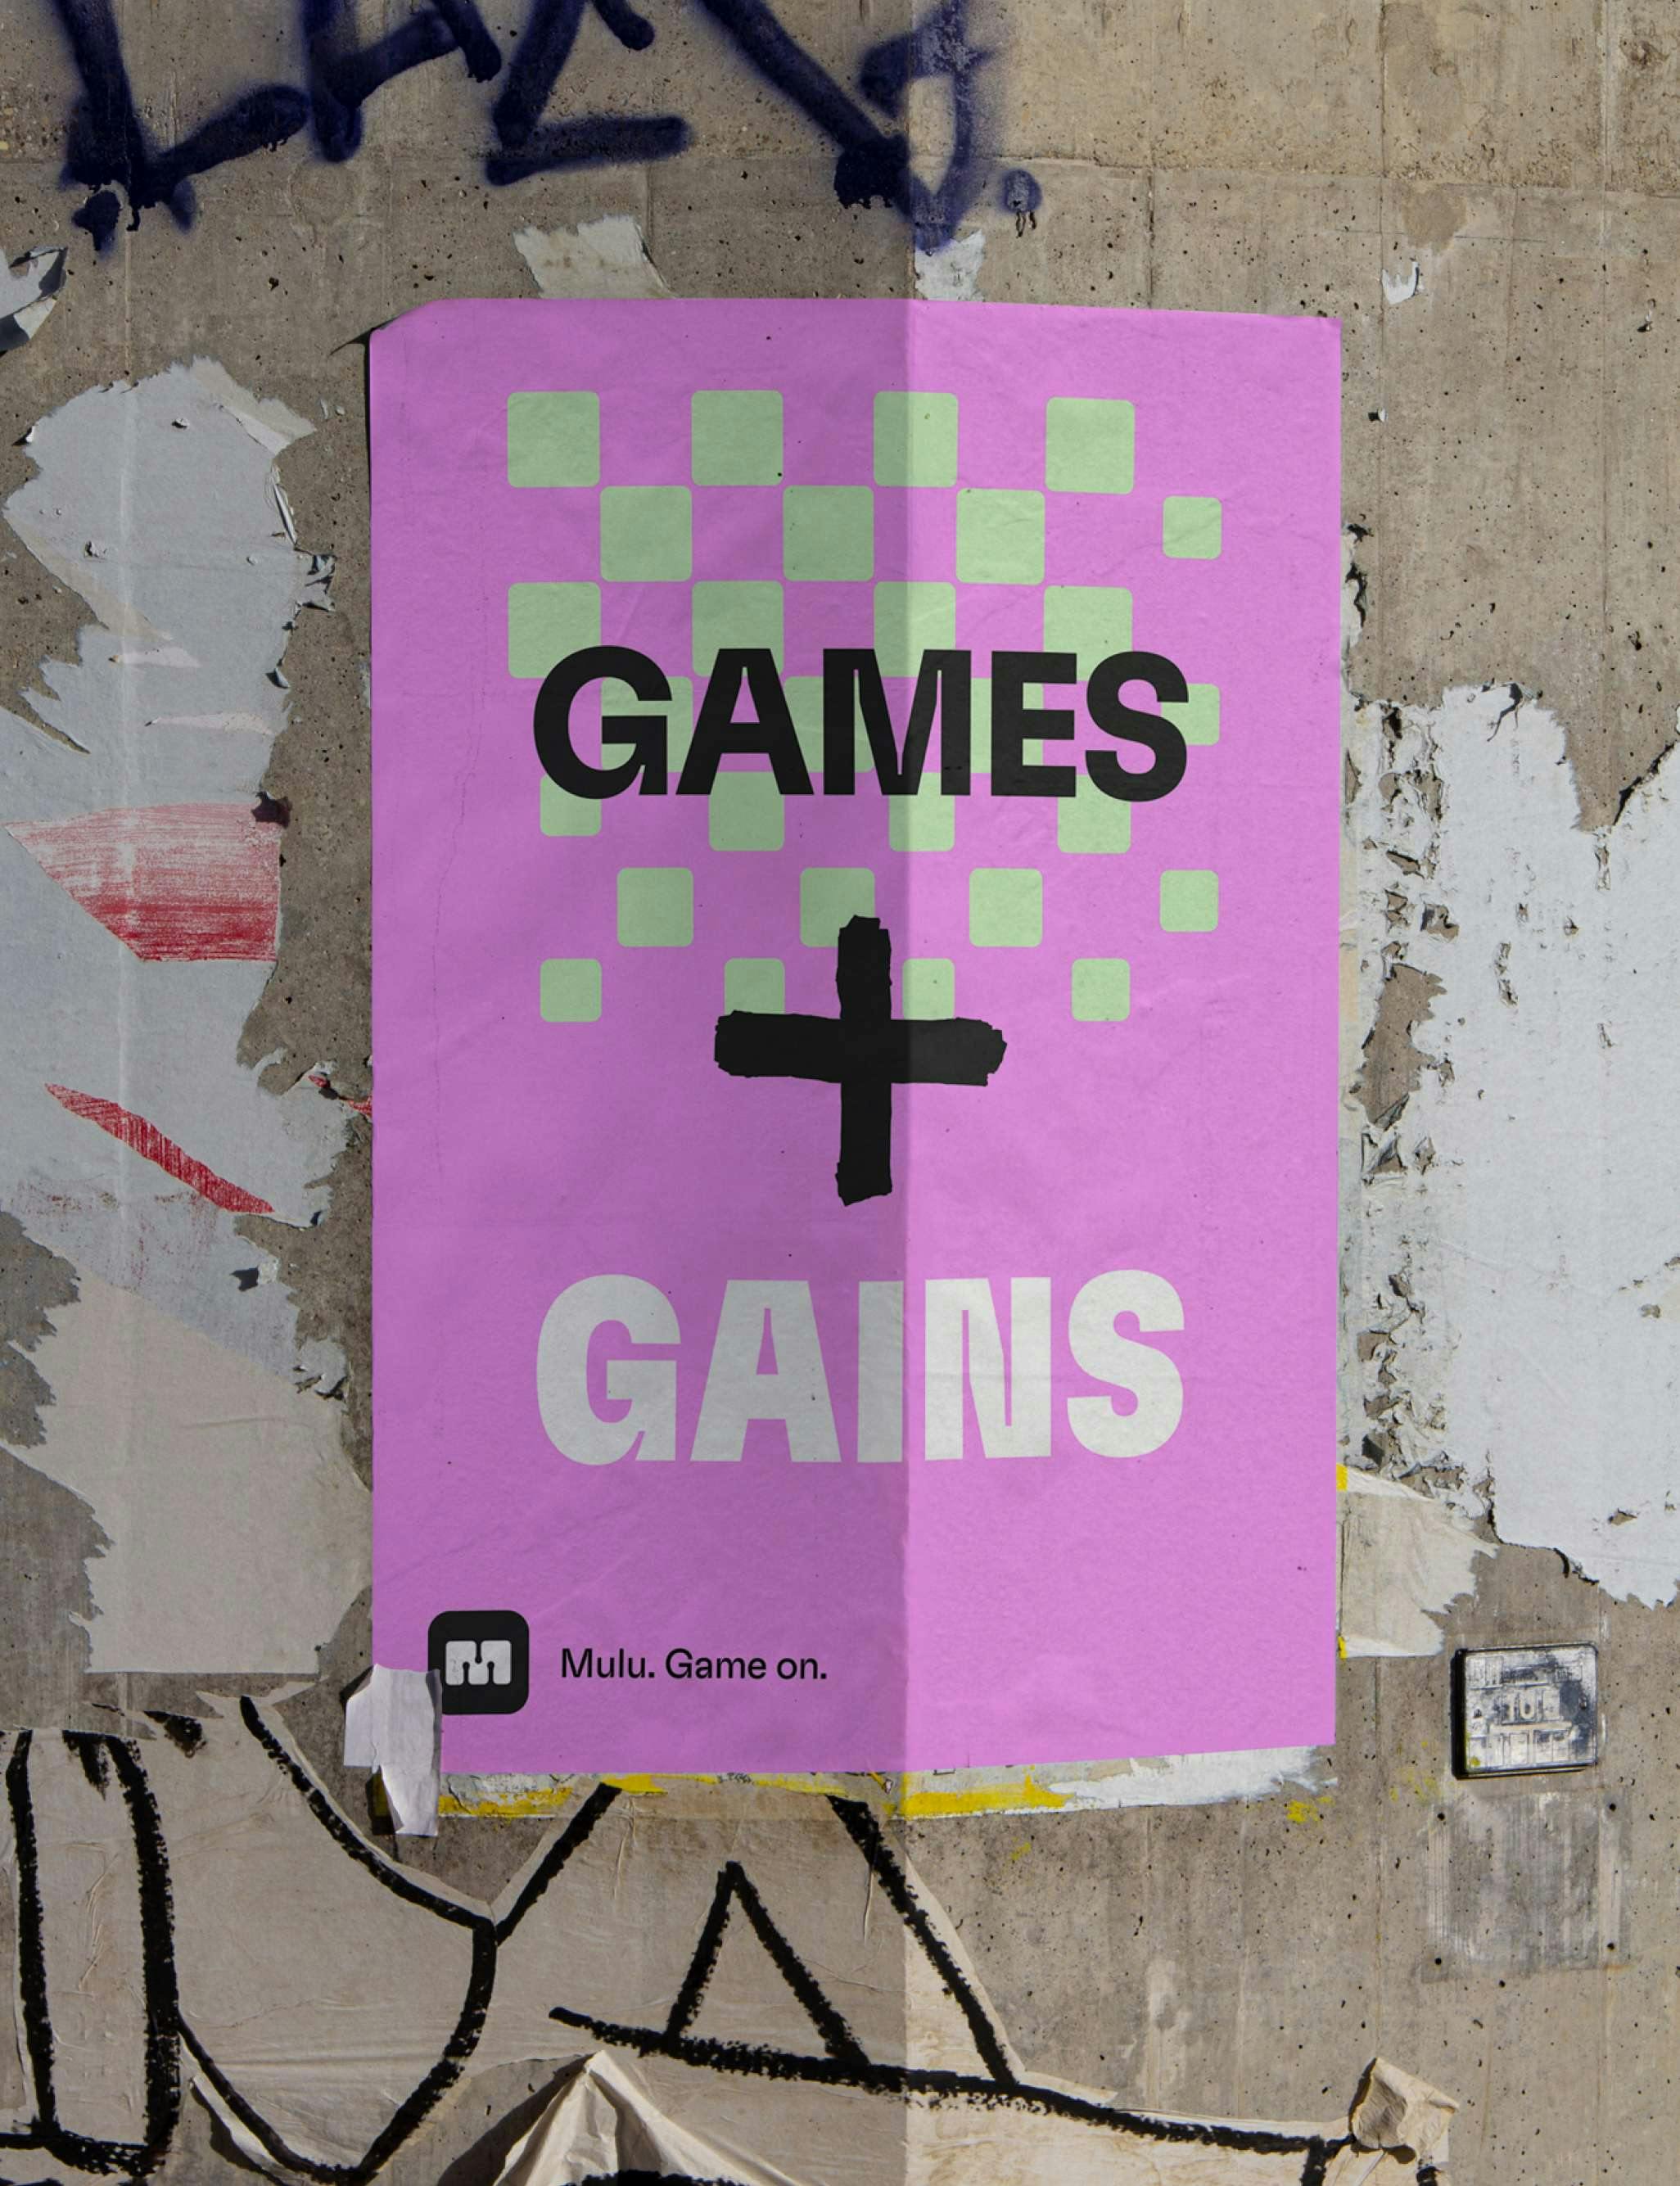 Mulu poster says "Game + Gains"